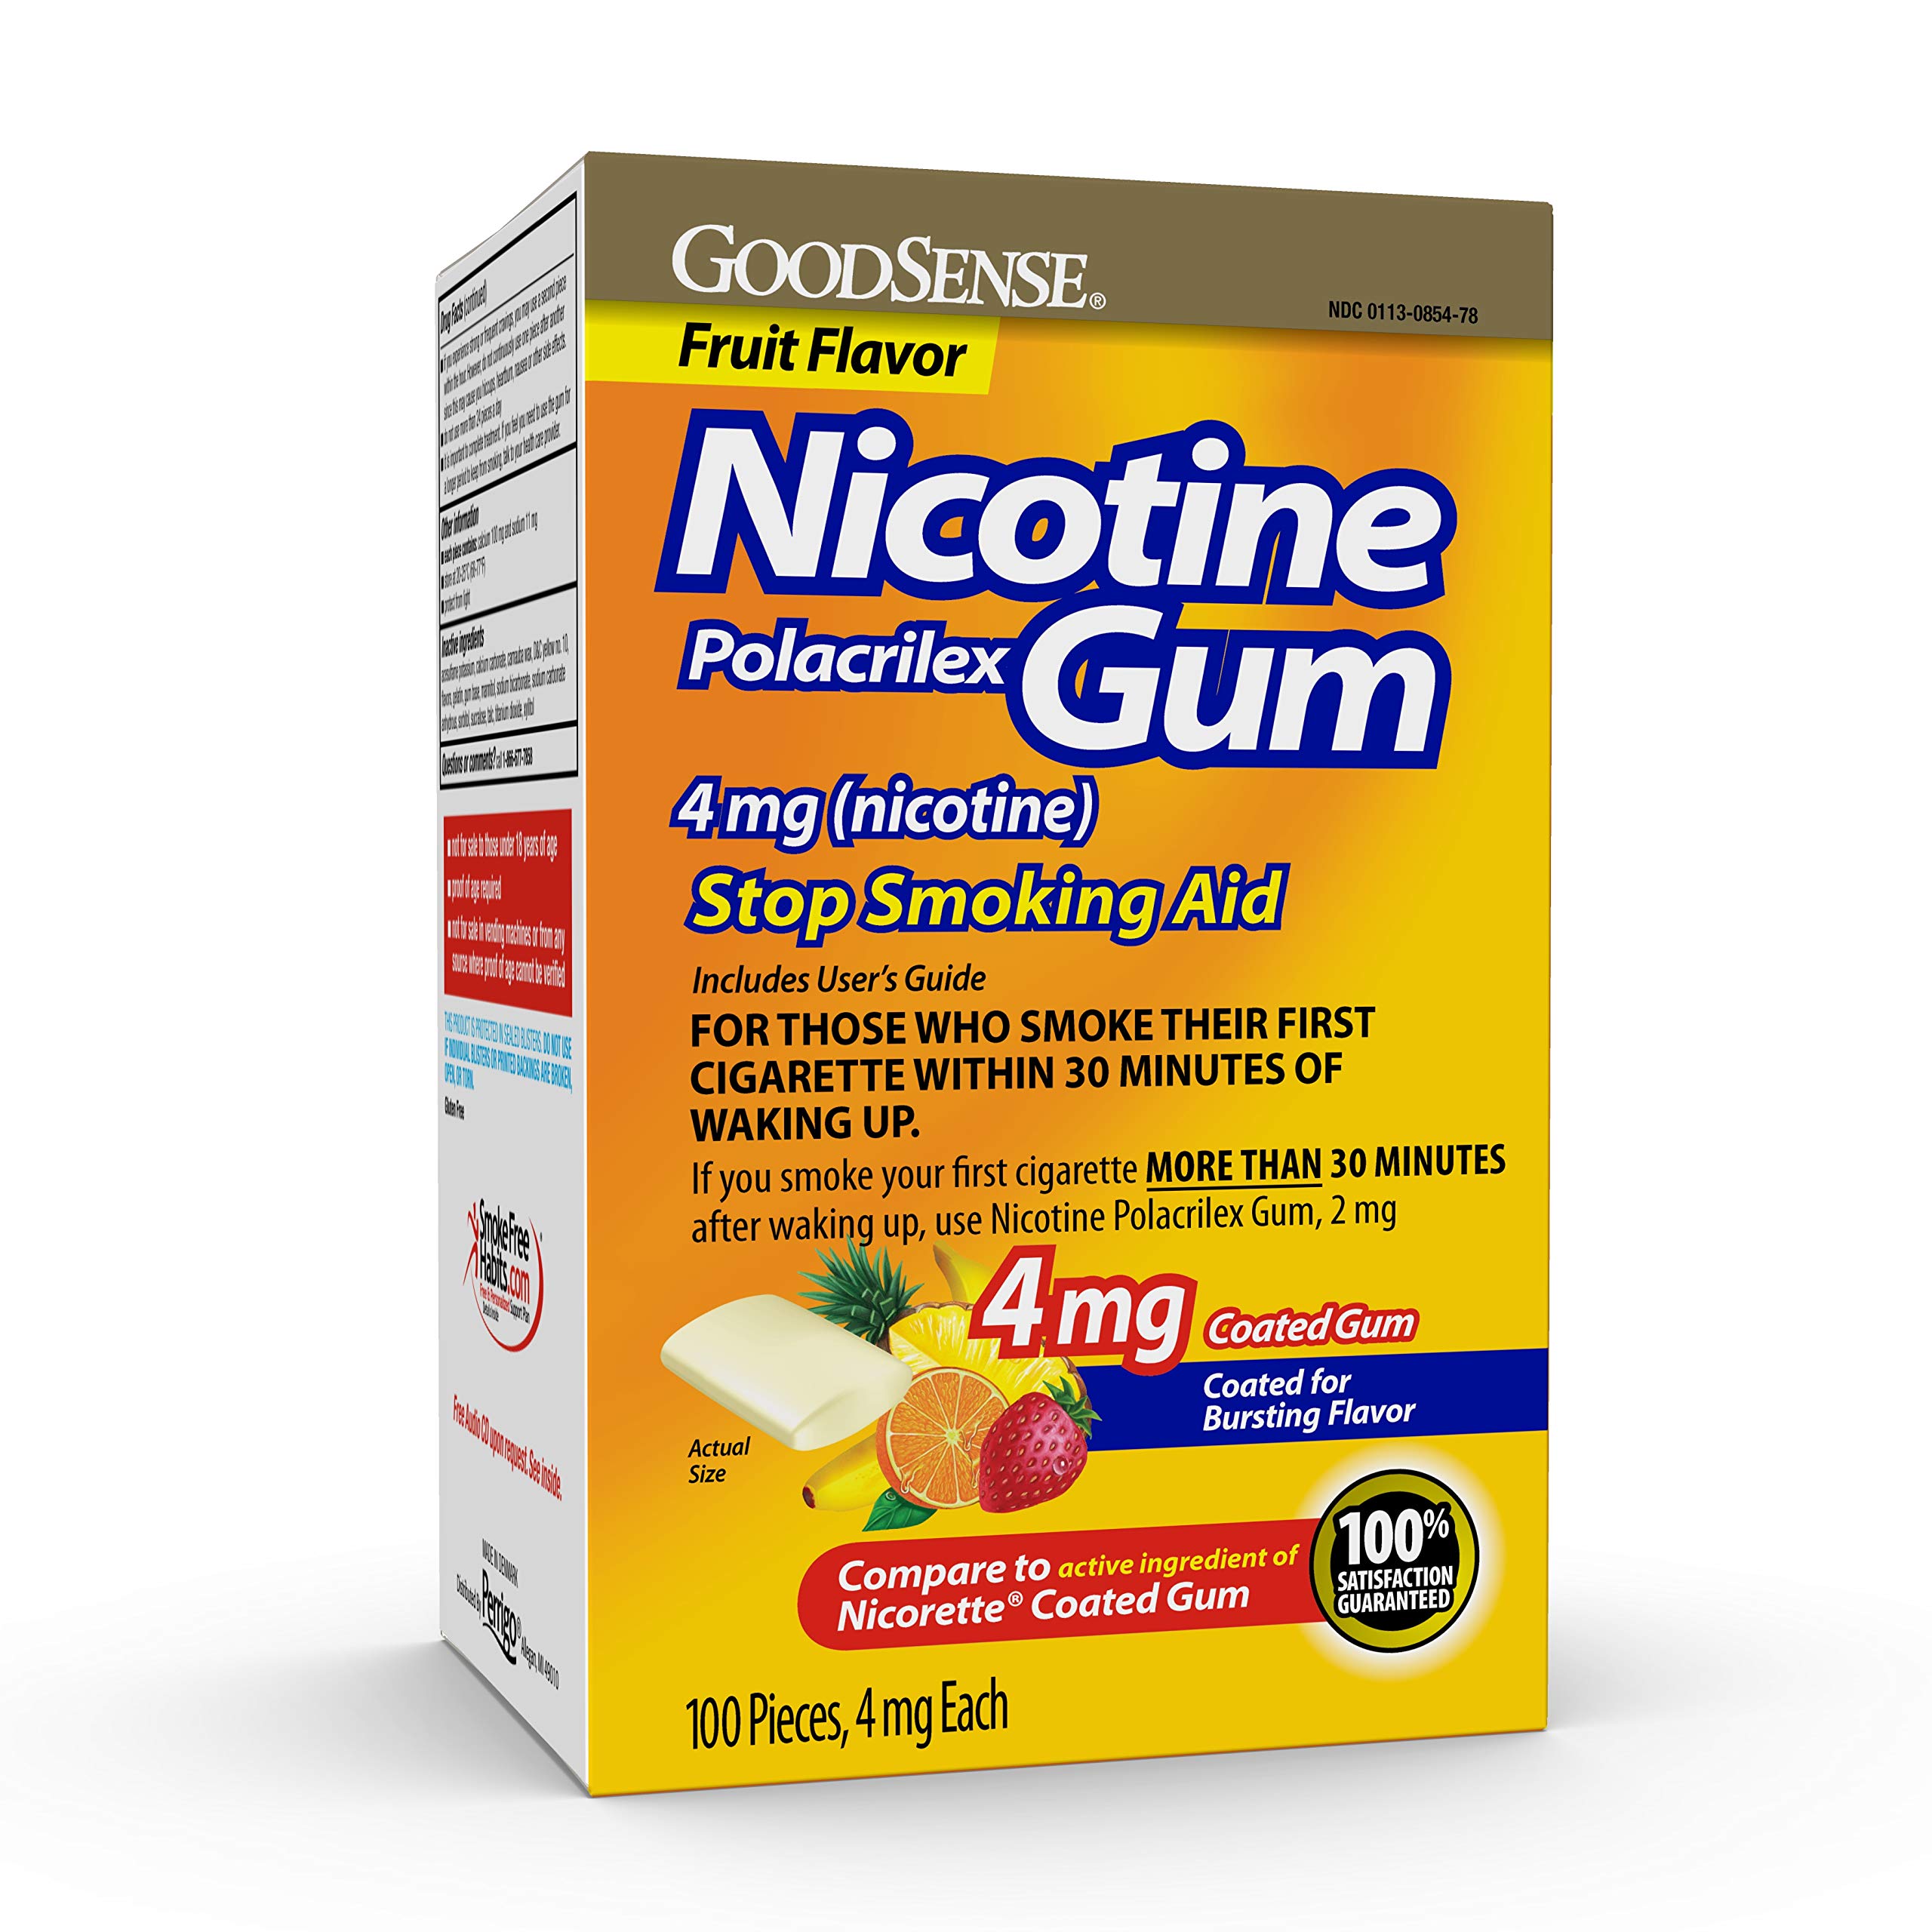 GoodSense Nicotine Polacrilex Coated Gum 4 mg (Nicotine), Fruit Flavor, Stop Smoking Aid; Quit Smoking with Nicotine Gum, 100 Co